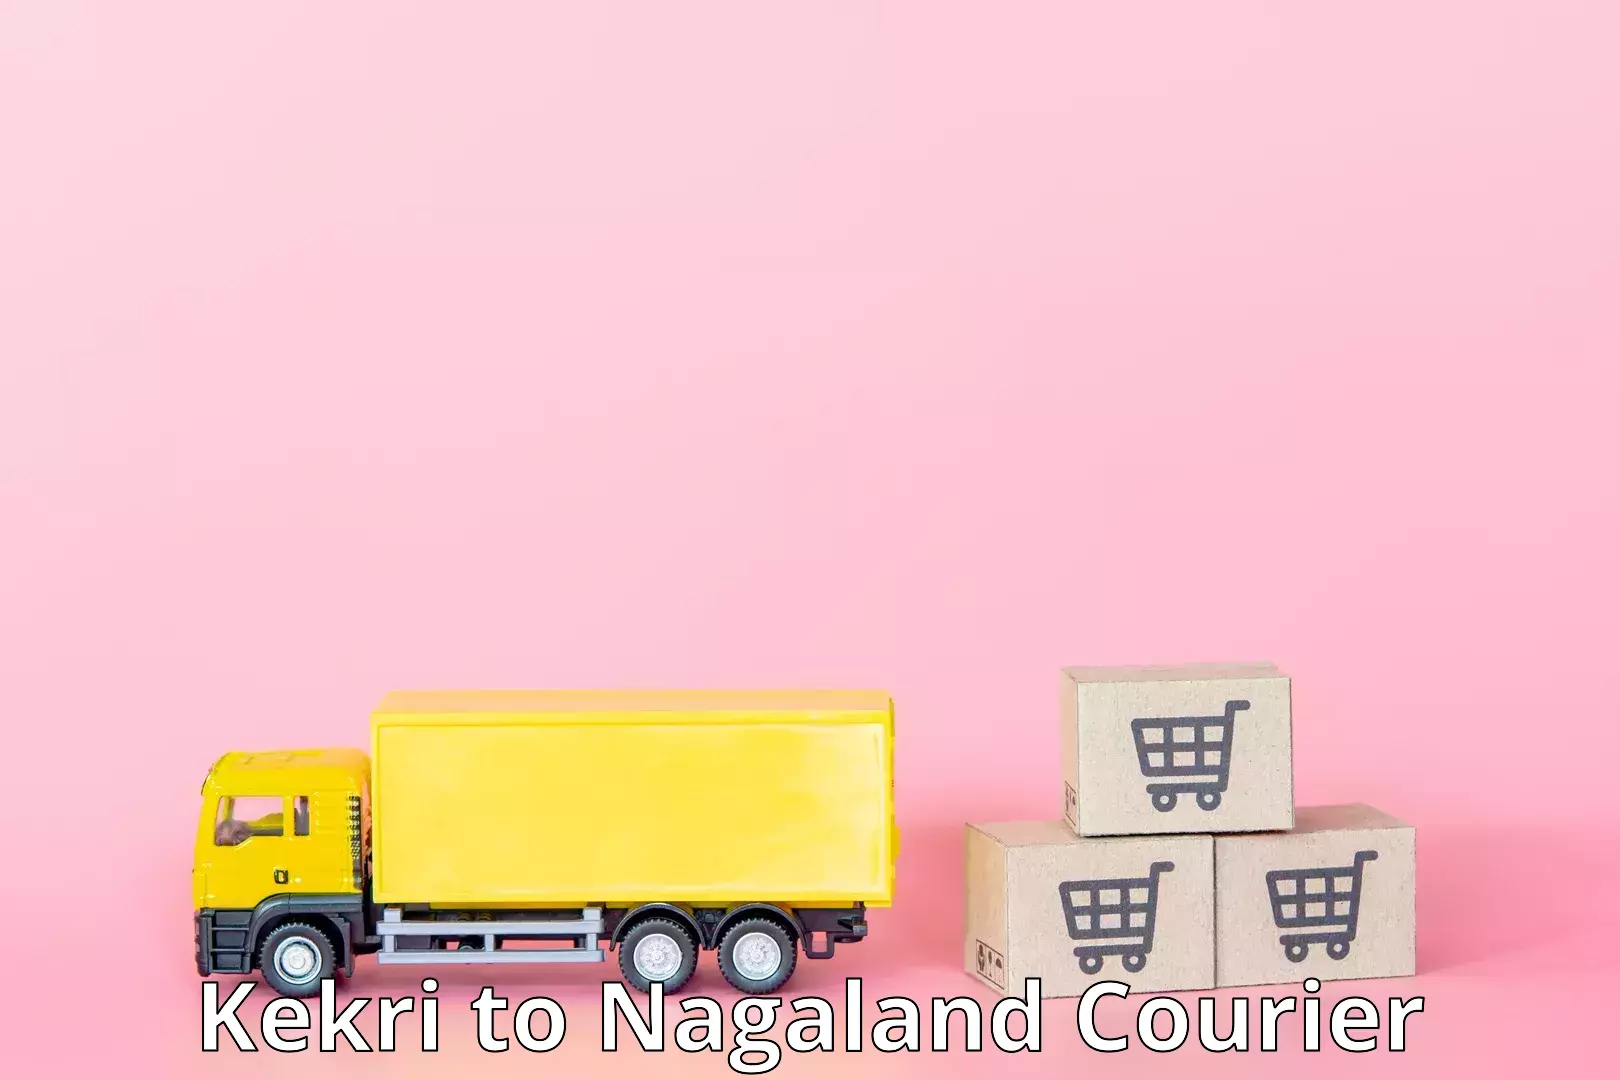 Special handling courier Kekri to Nagaland